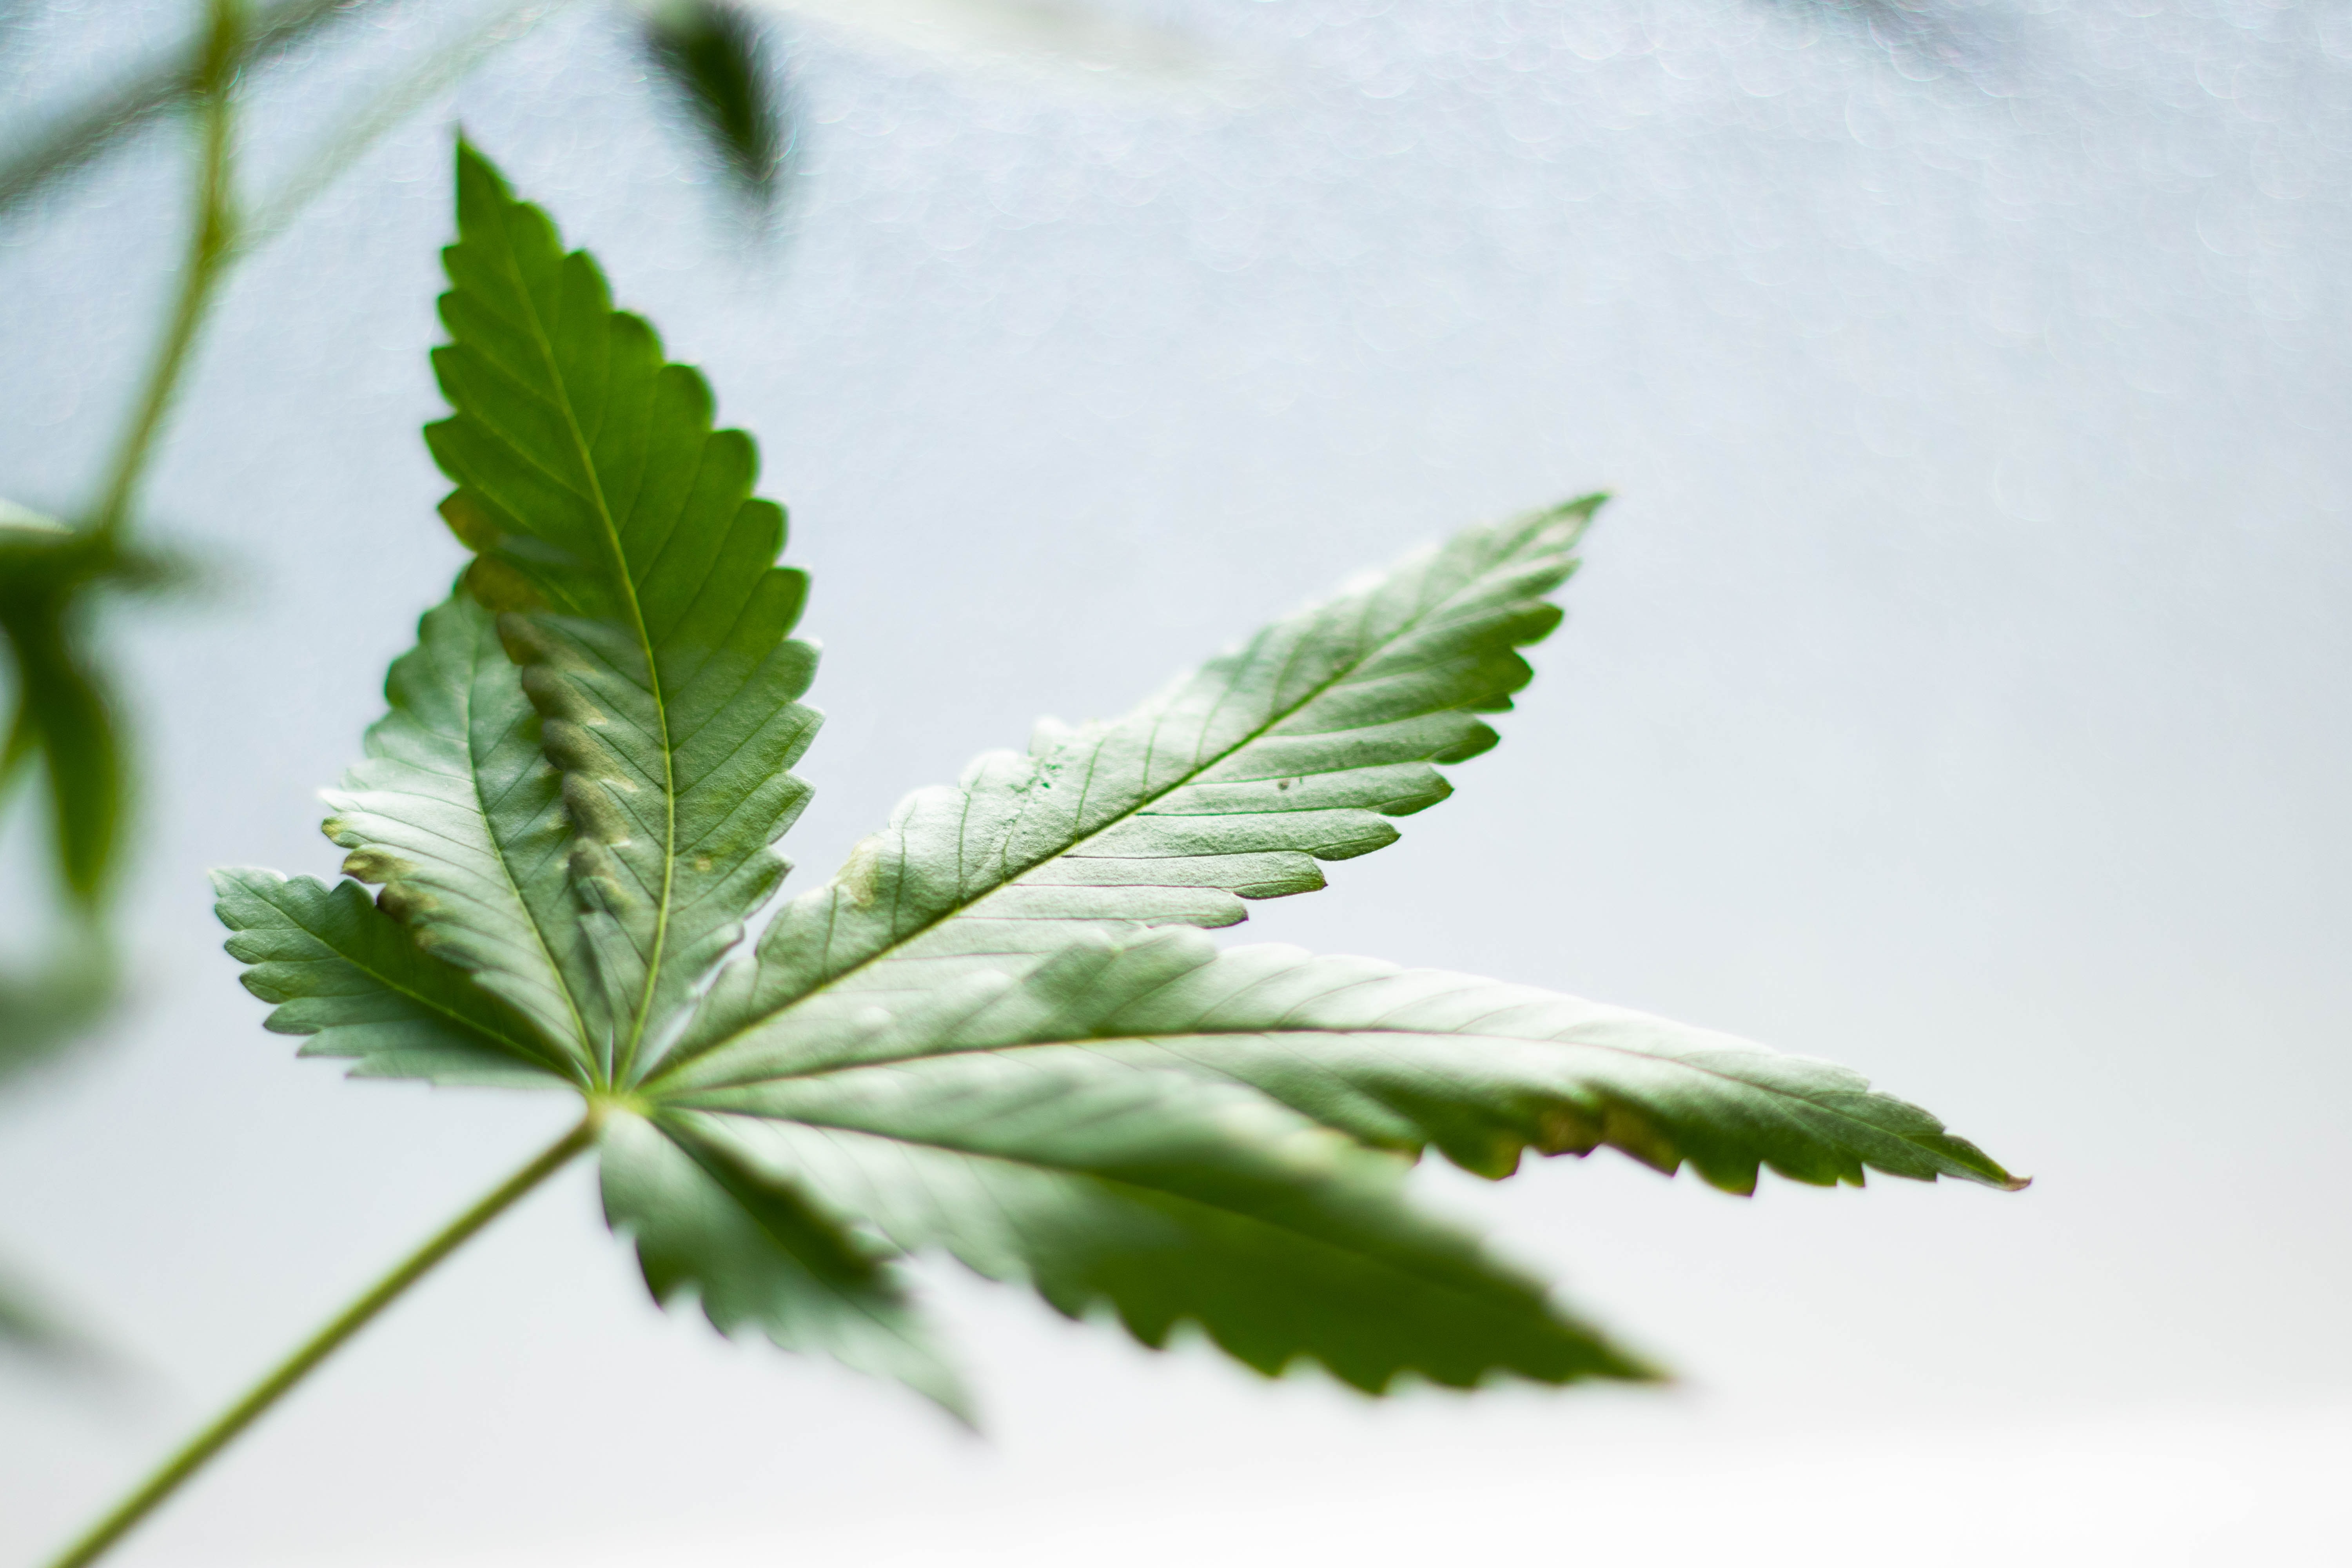 Photo of marijuana leaf on light colored background.